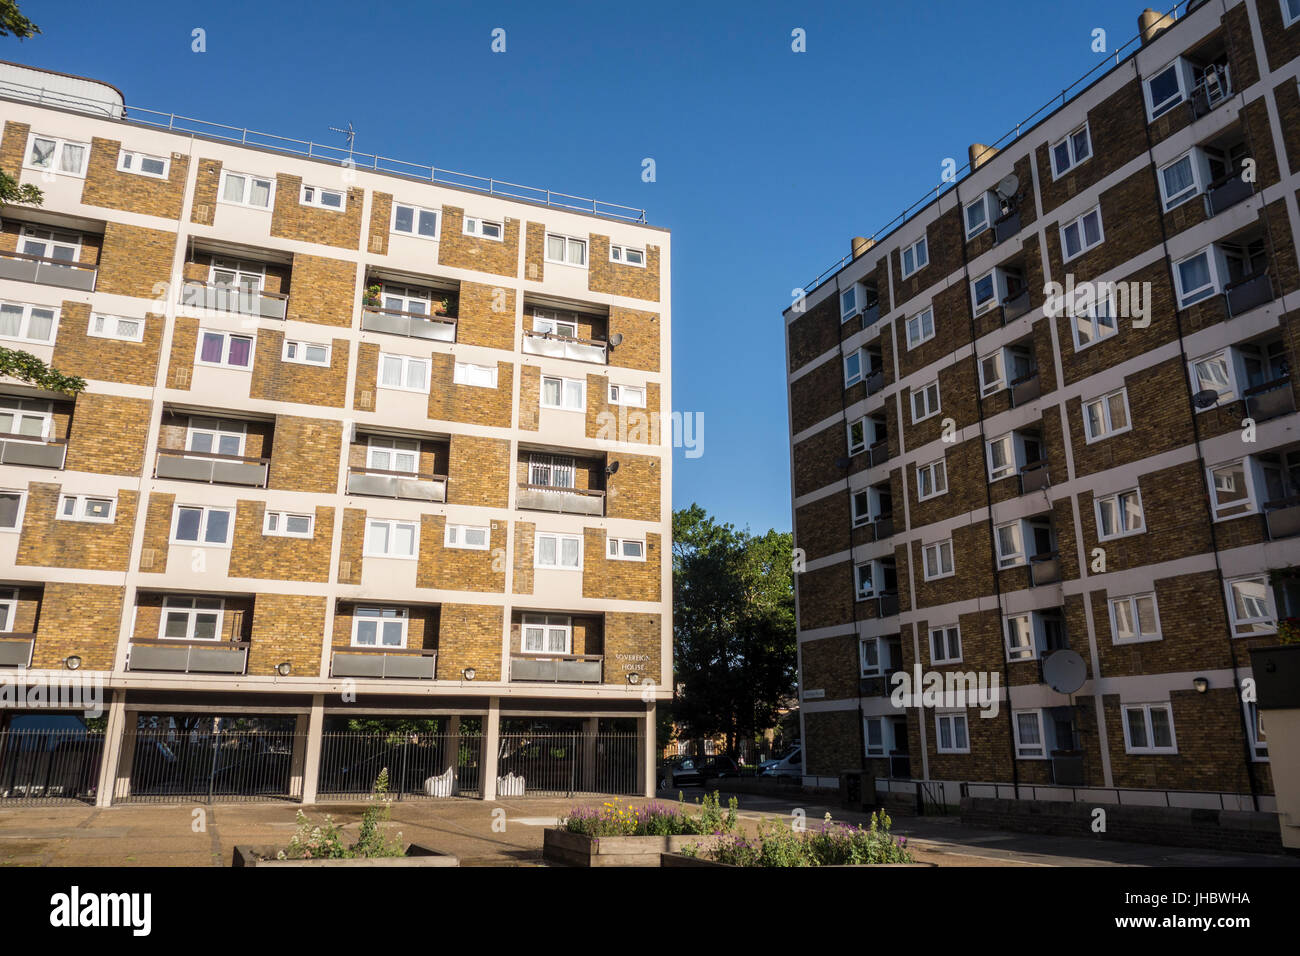 Le logement social dans la ville de Globe, Cambridge Heath Road, Bethnal Green, Tower Hamlets, East London, UK Banque D'Images